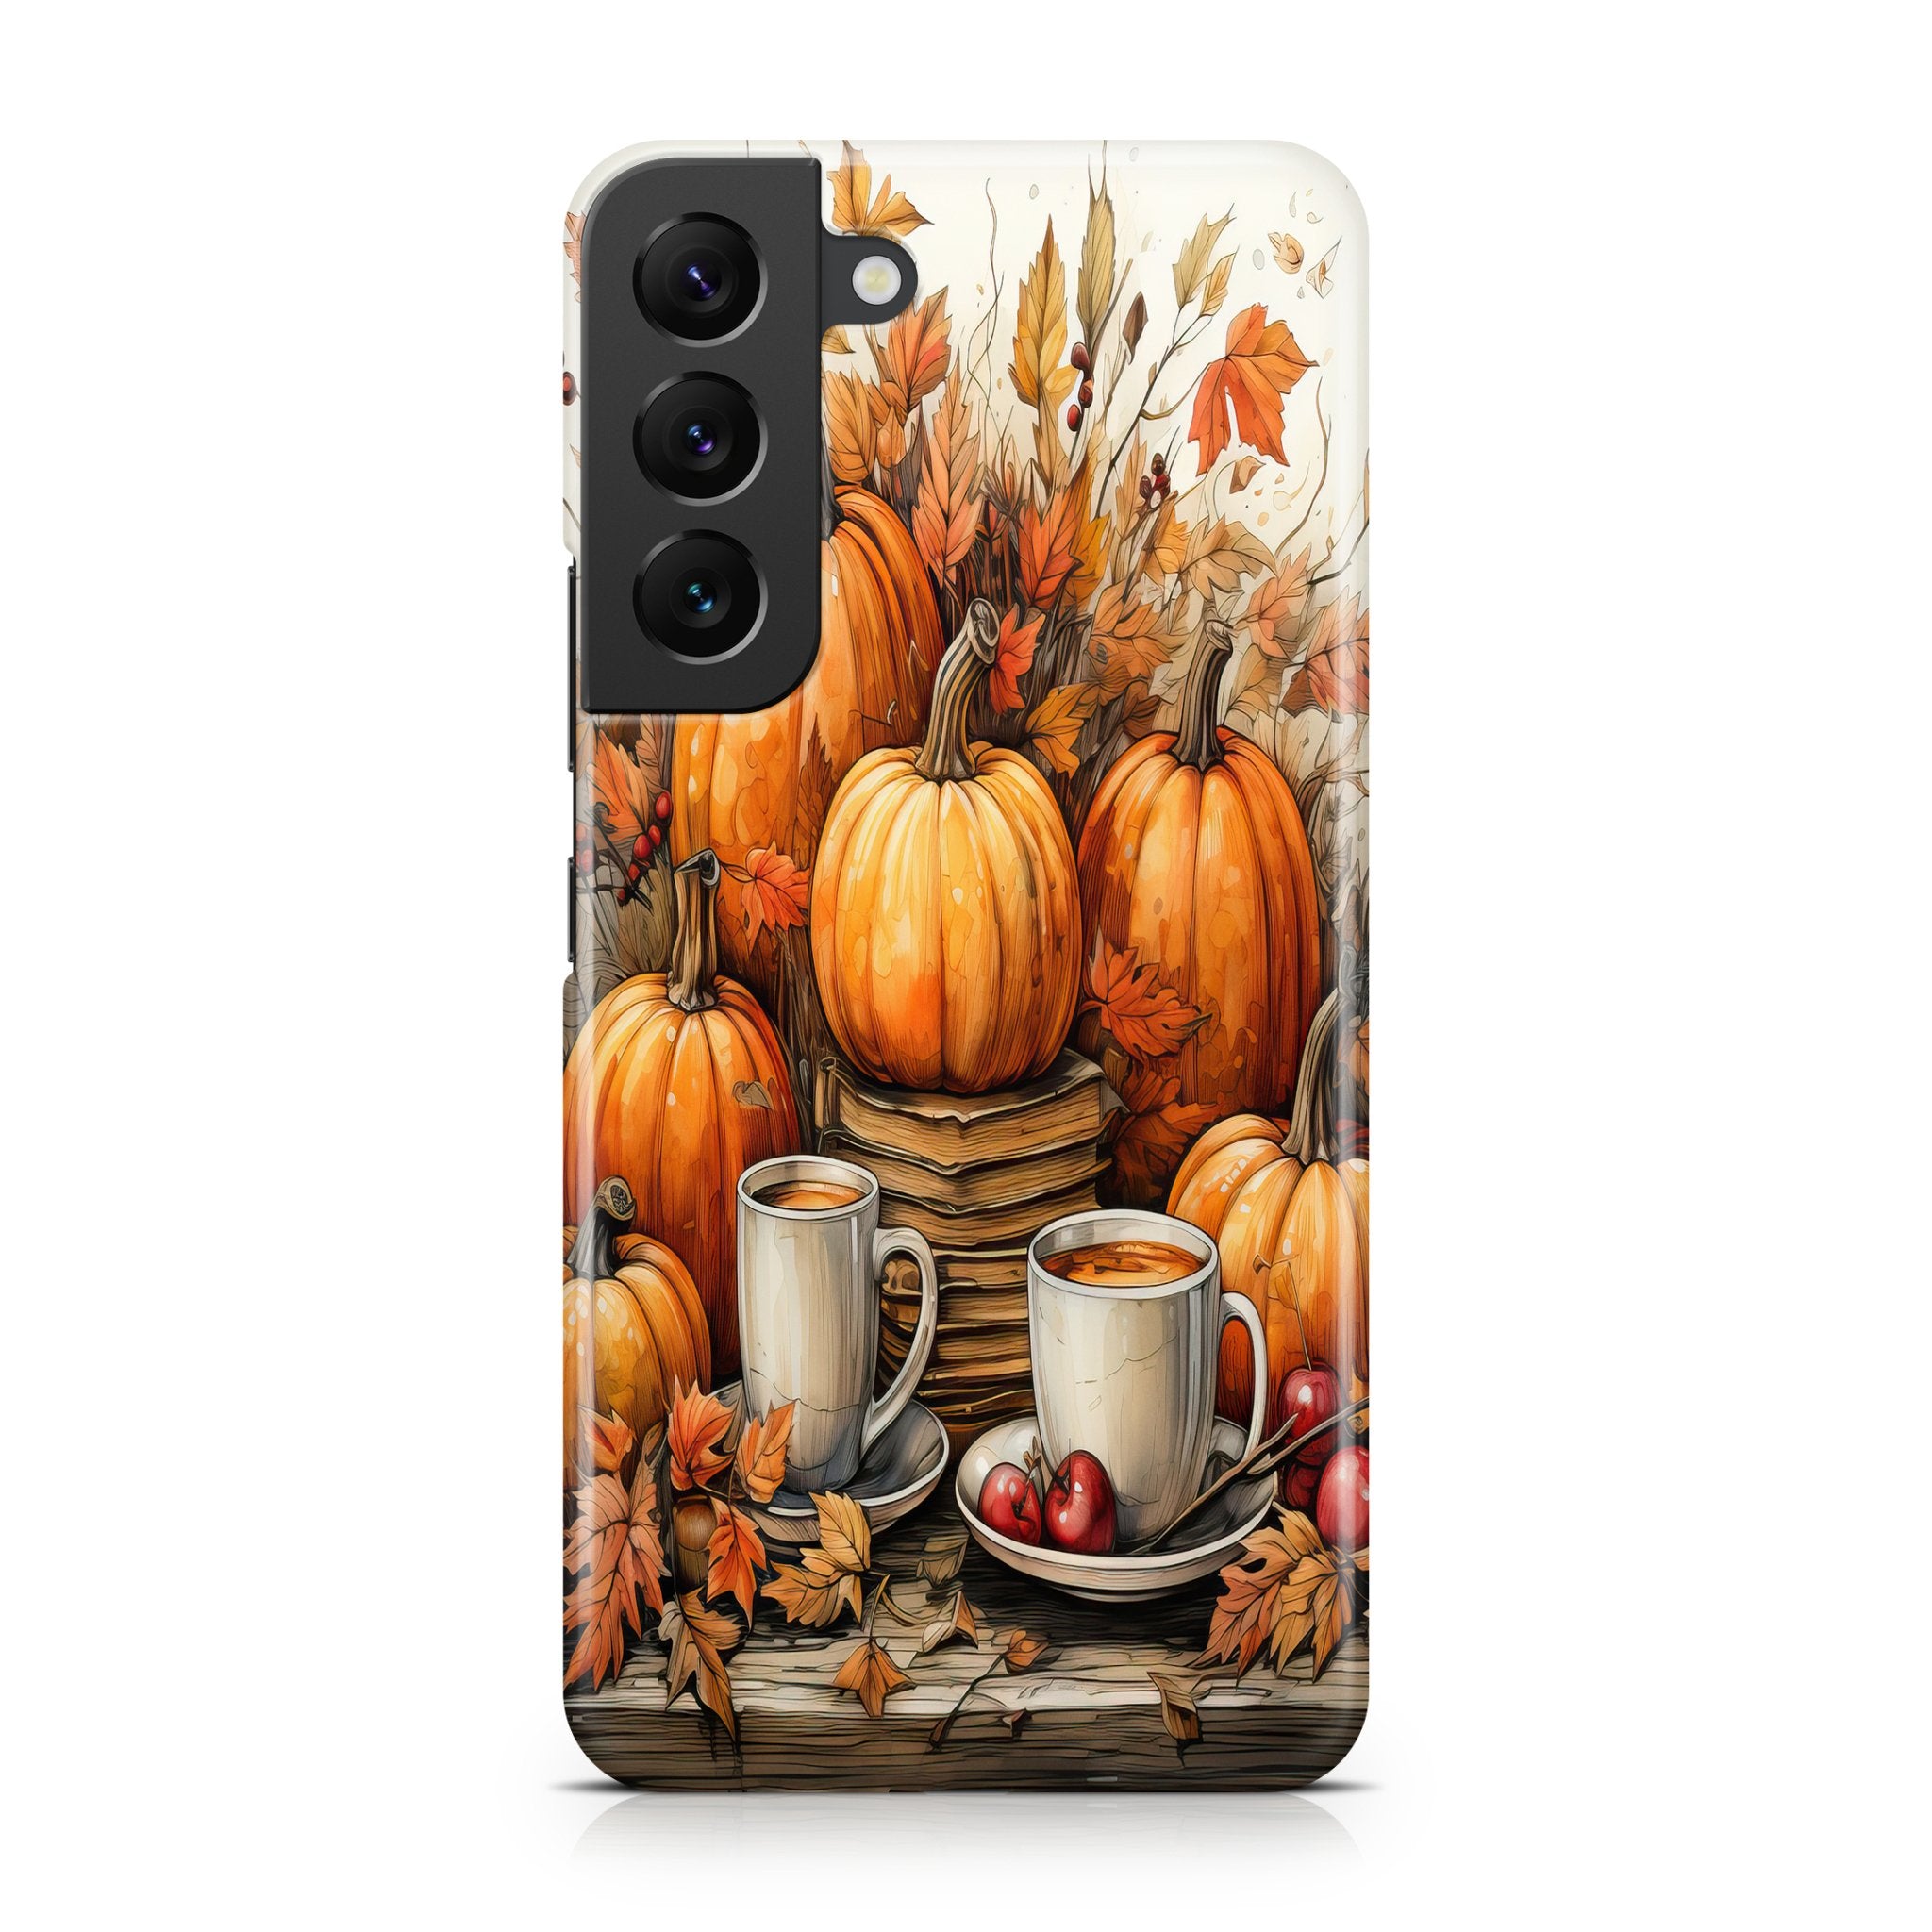 Harvest Pumpkin - Samsung phone case designs by CaseSwagger